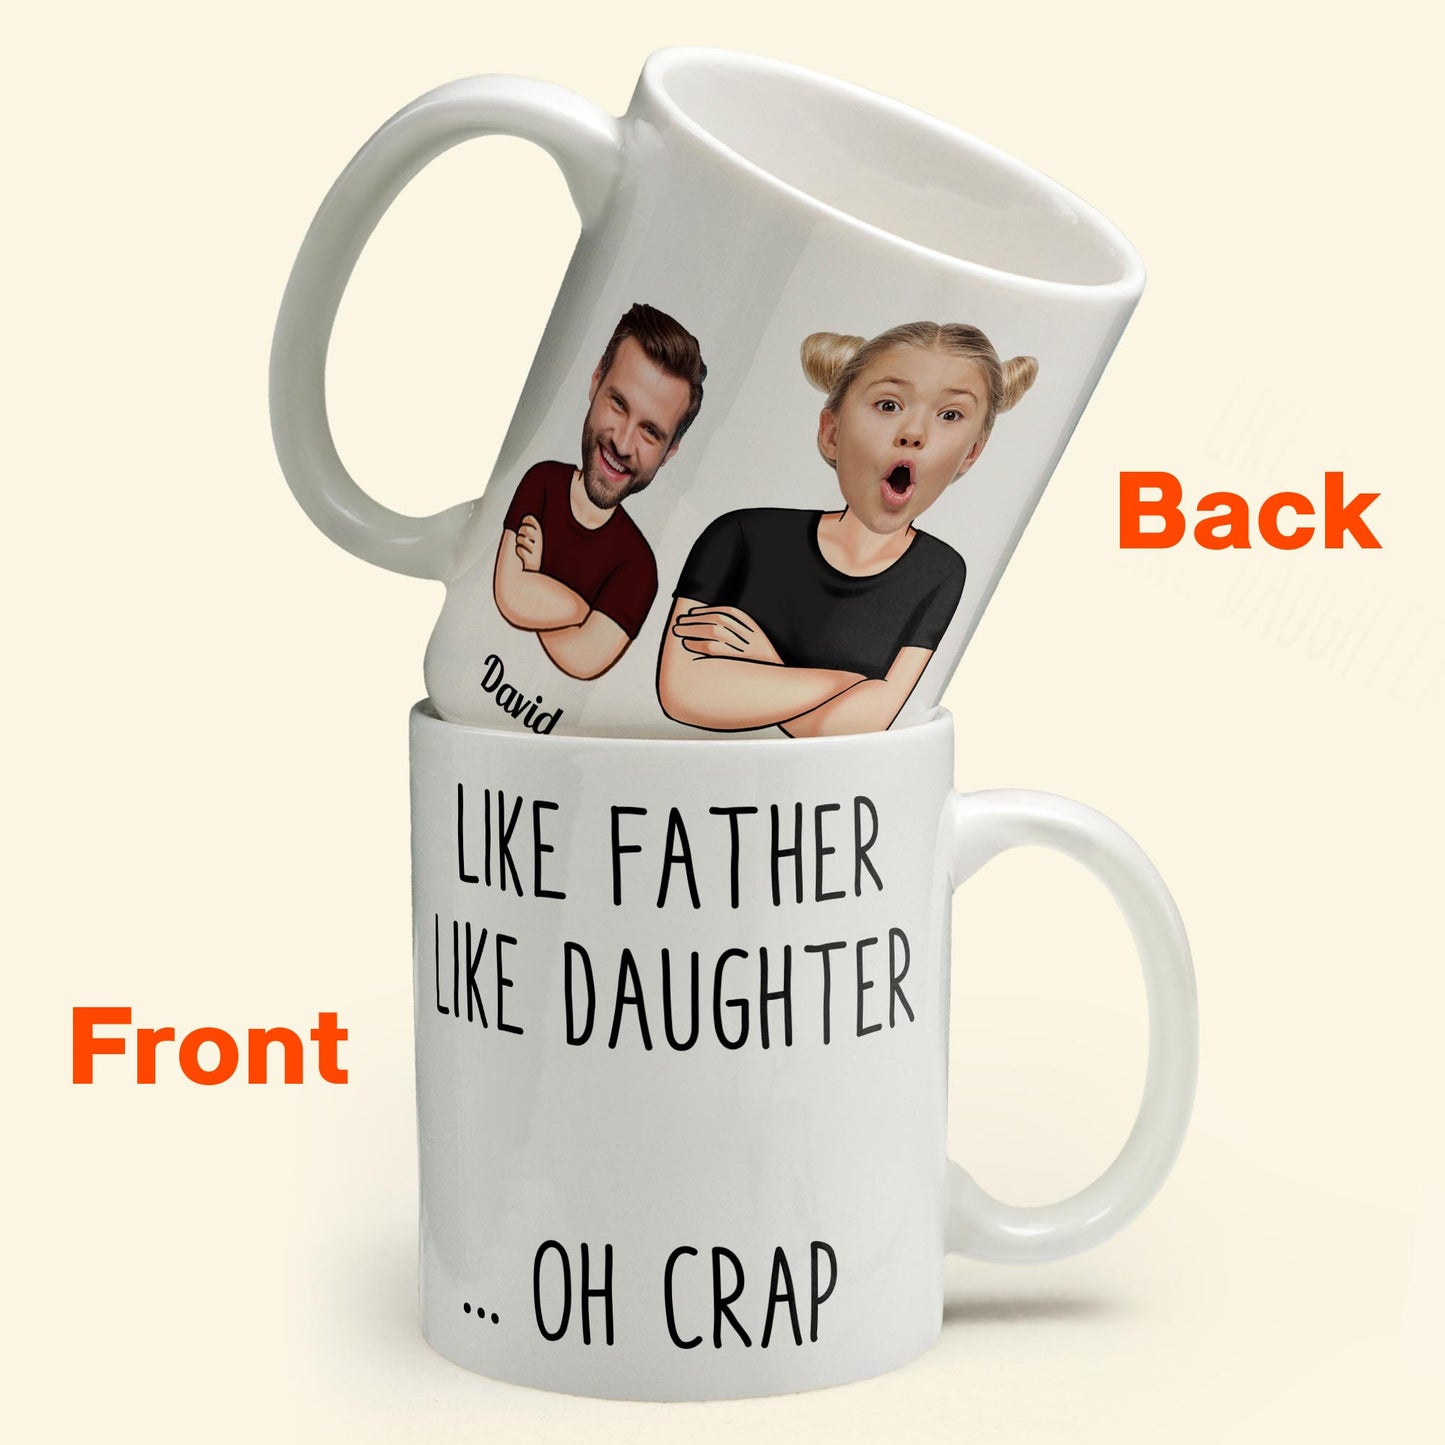 Like Father Like Daughter - Personalized Photo Mug